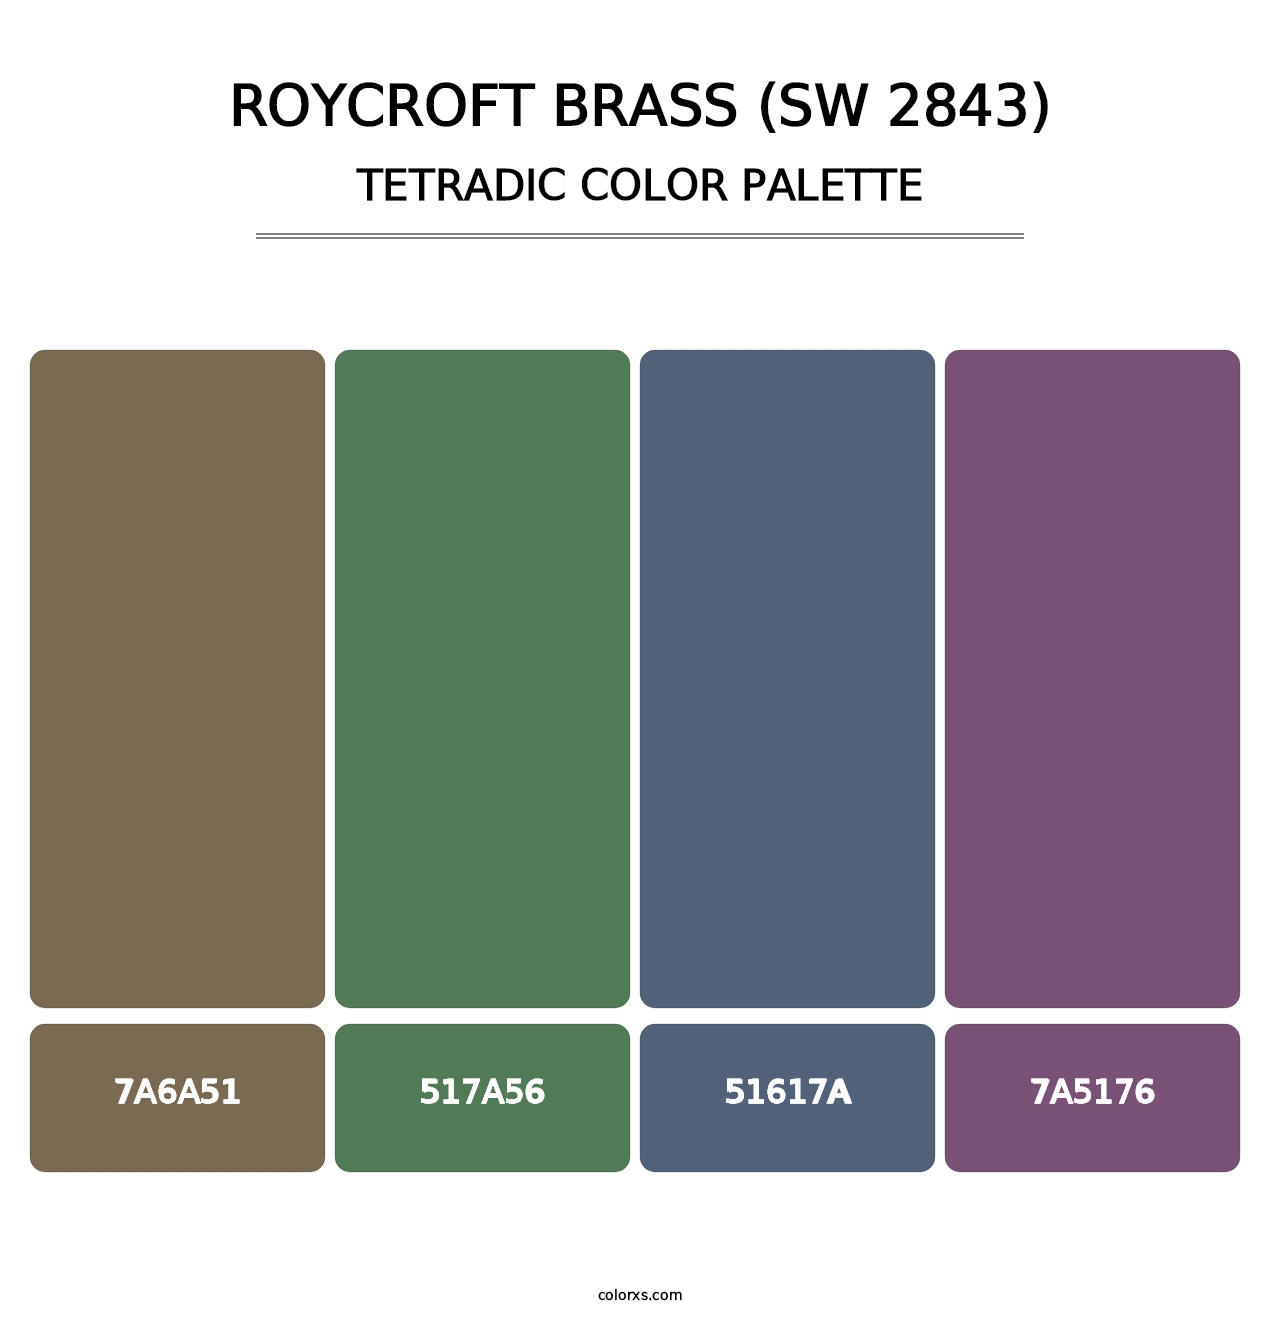 Roycroft Brass (SW 2843) - Tetradic Color Palette